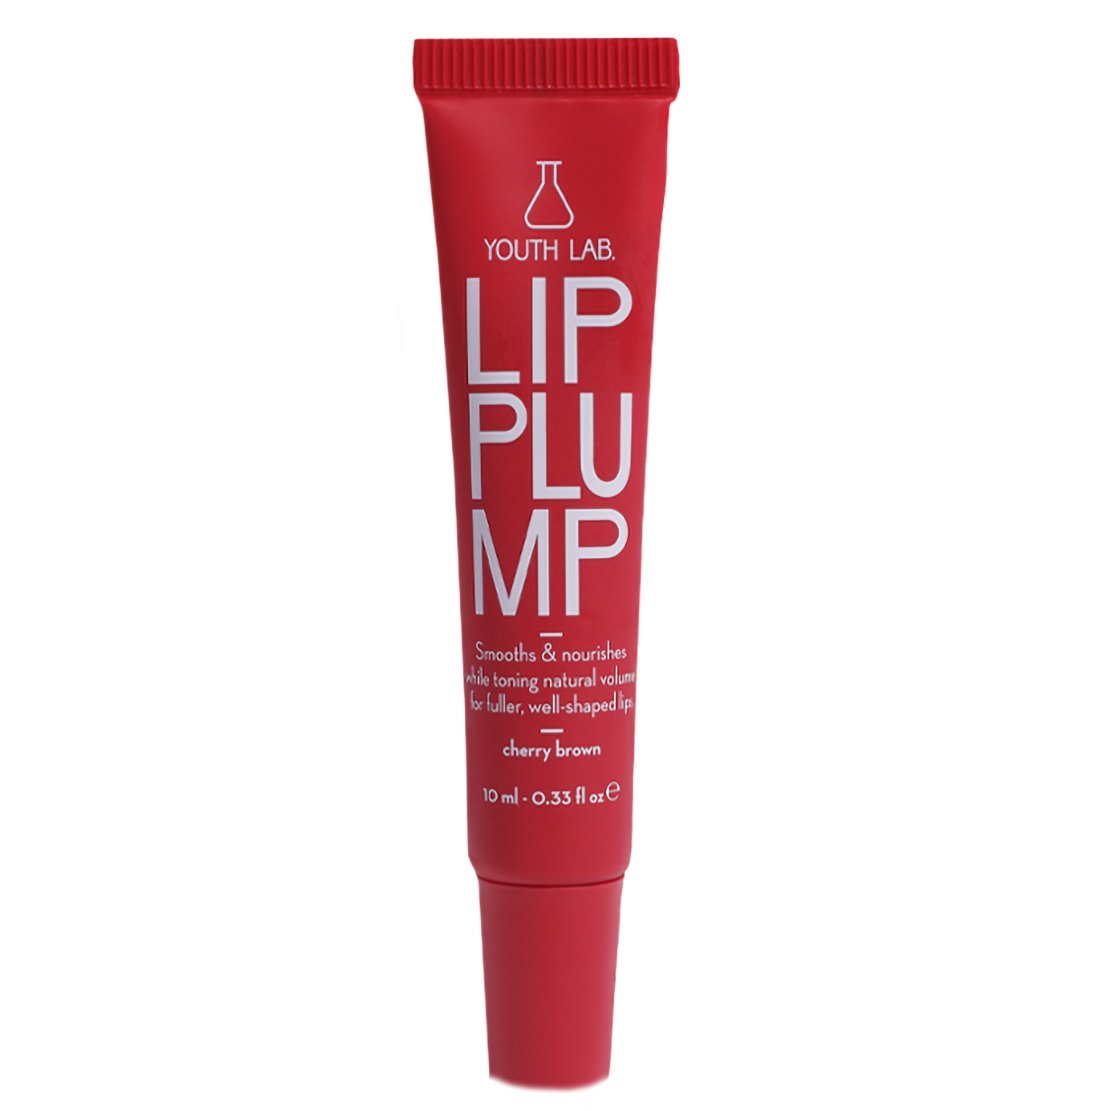 Youth Lab Lip Plump Instant Smoothing & Nourishing Lip Care Lip Gloss για Περιποίηση Χειλιών & Λείανση Γραμμών 10ml – Cherry Brown